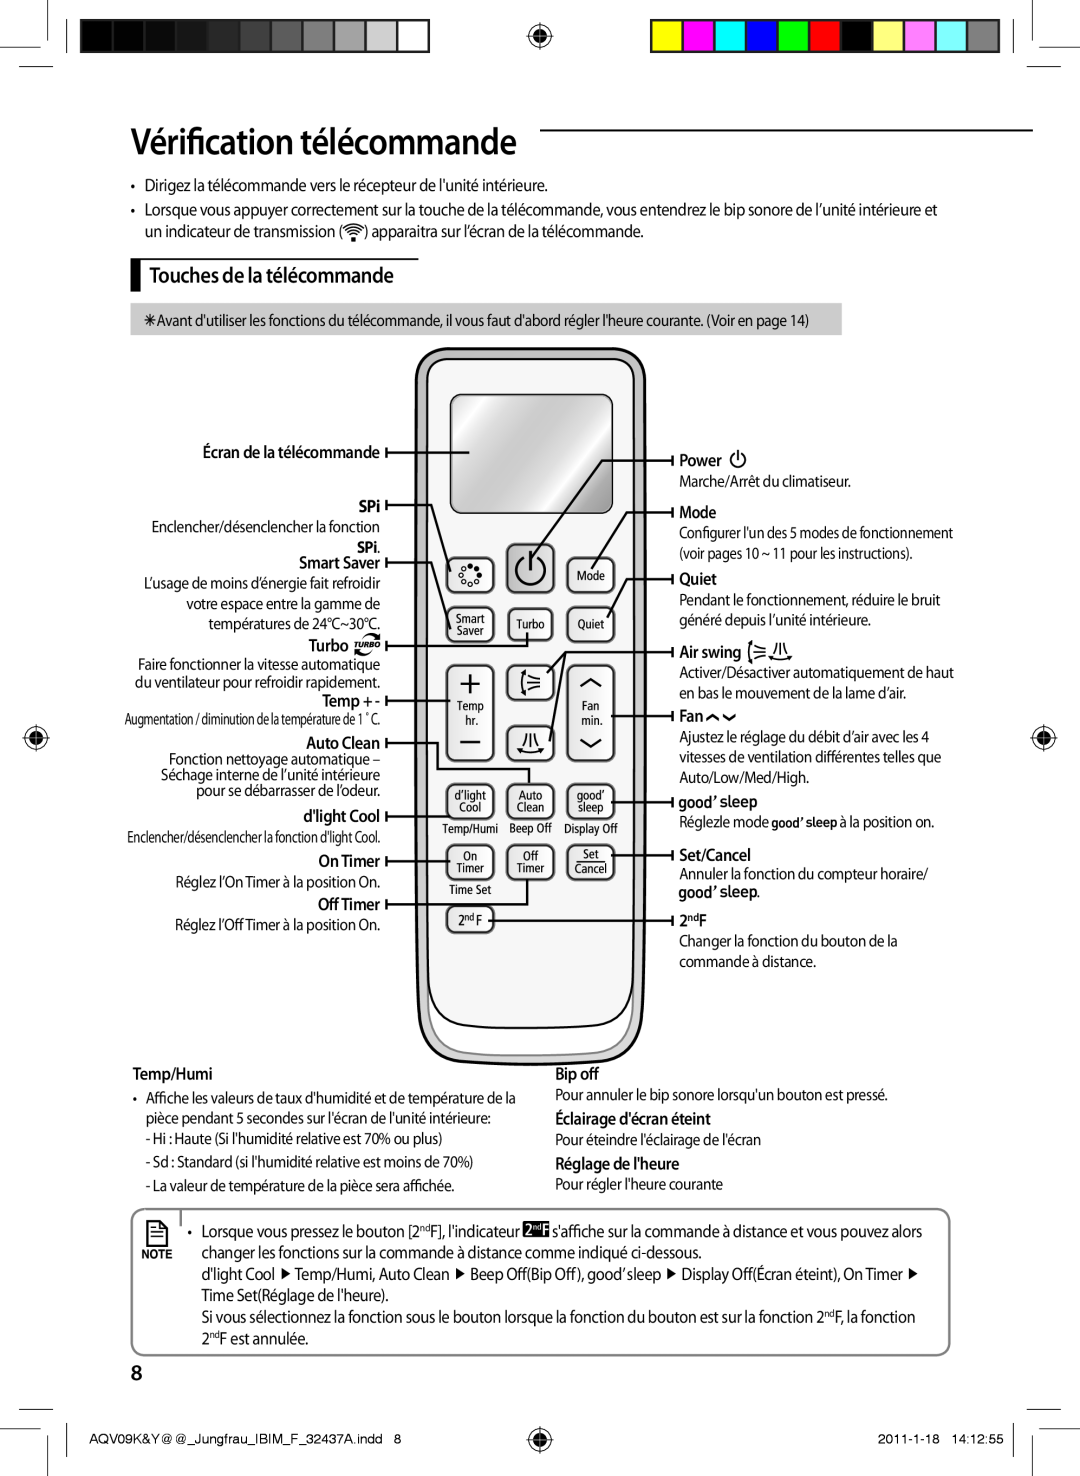 Samsung AQV12YWAX Vérification télécommande, Touches de la télécommande, Écran de la télécommande SPi, Smart Saver, Turbo 